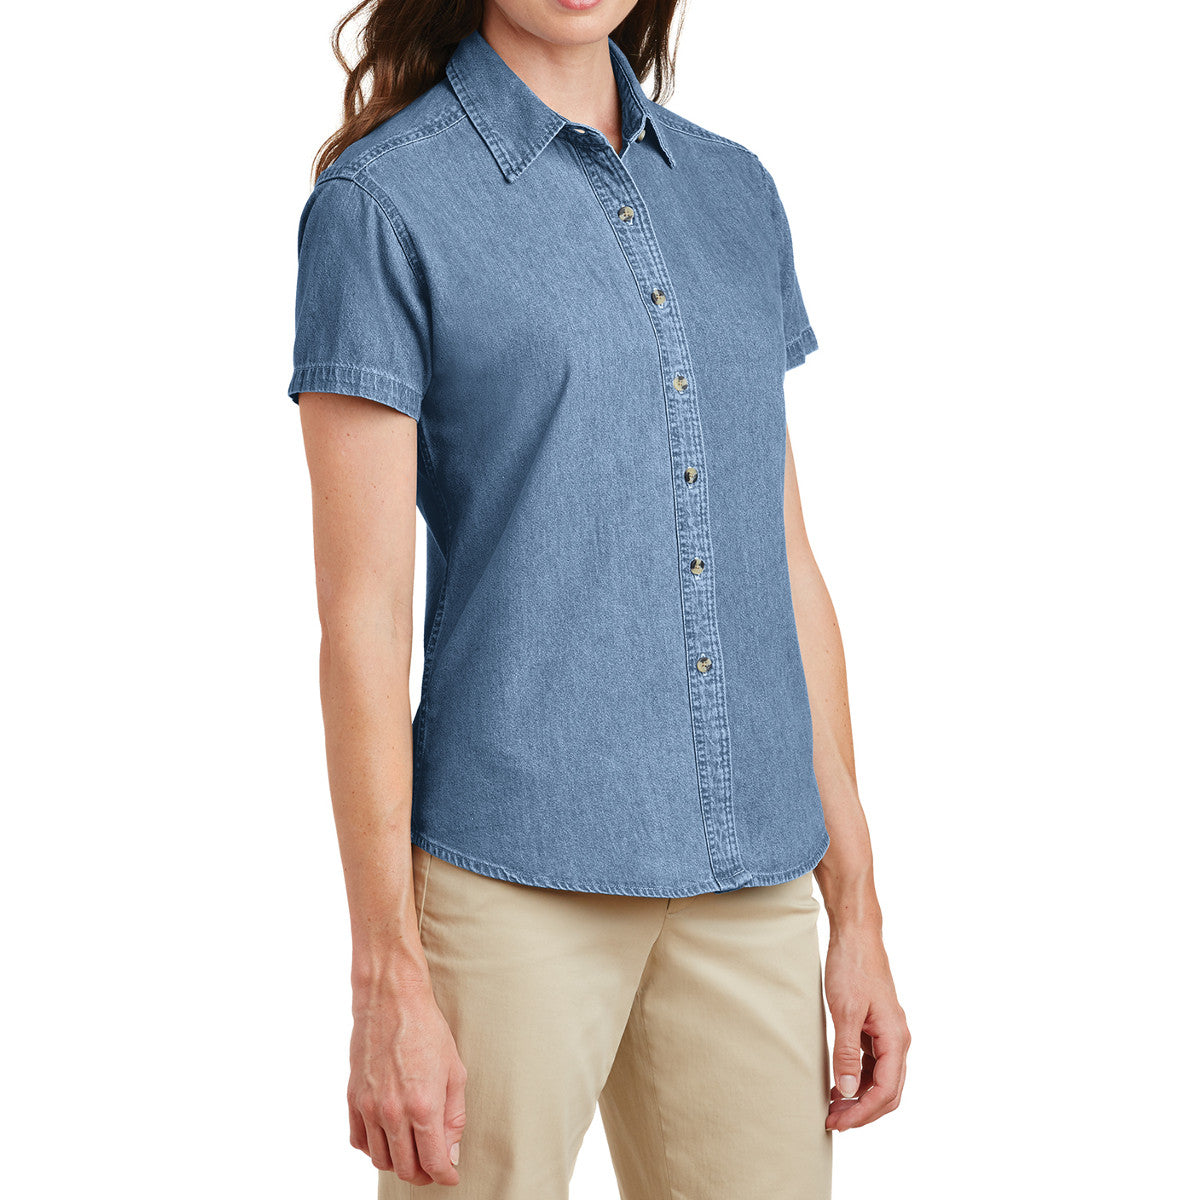 Mafoose Women's Short Sleeve Value Denim Shirt Faded Blue